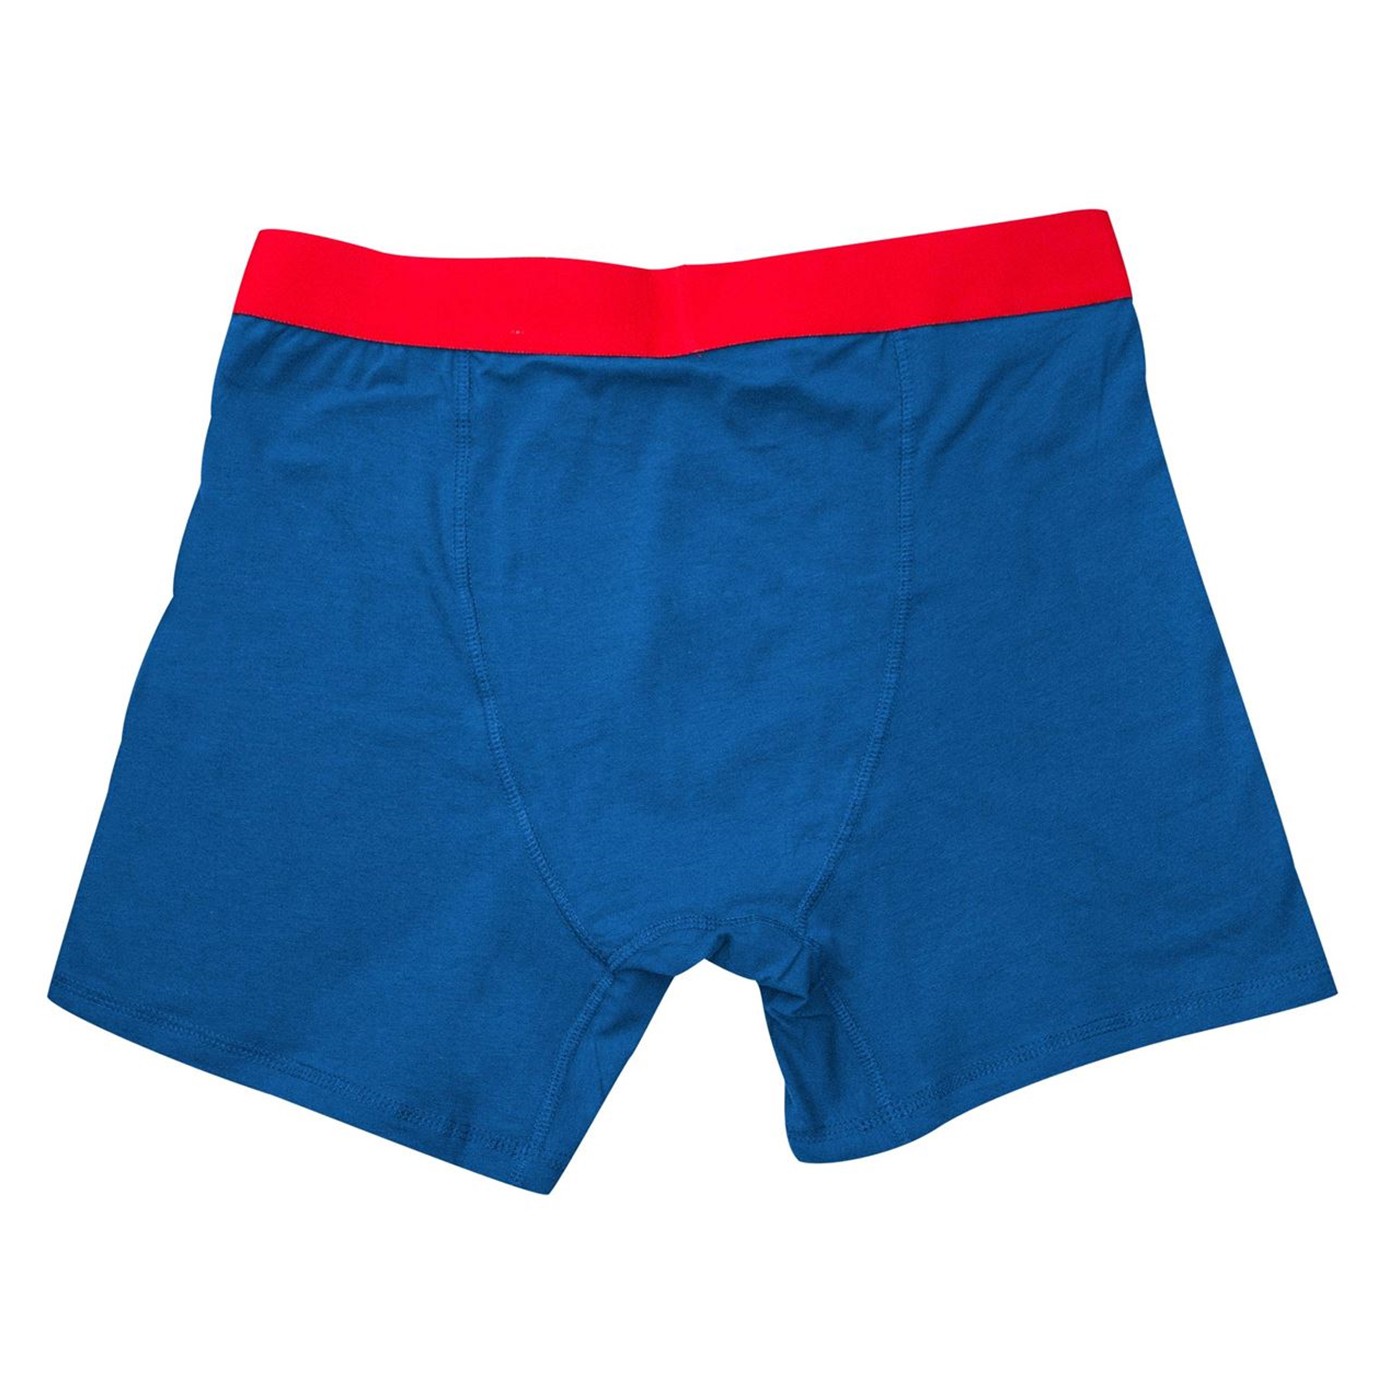 Superman Classic Men's Underwear Boxer Briefs